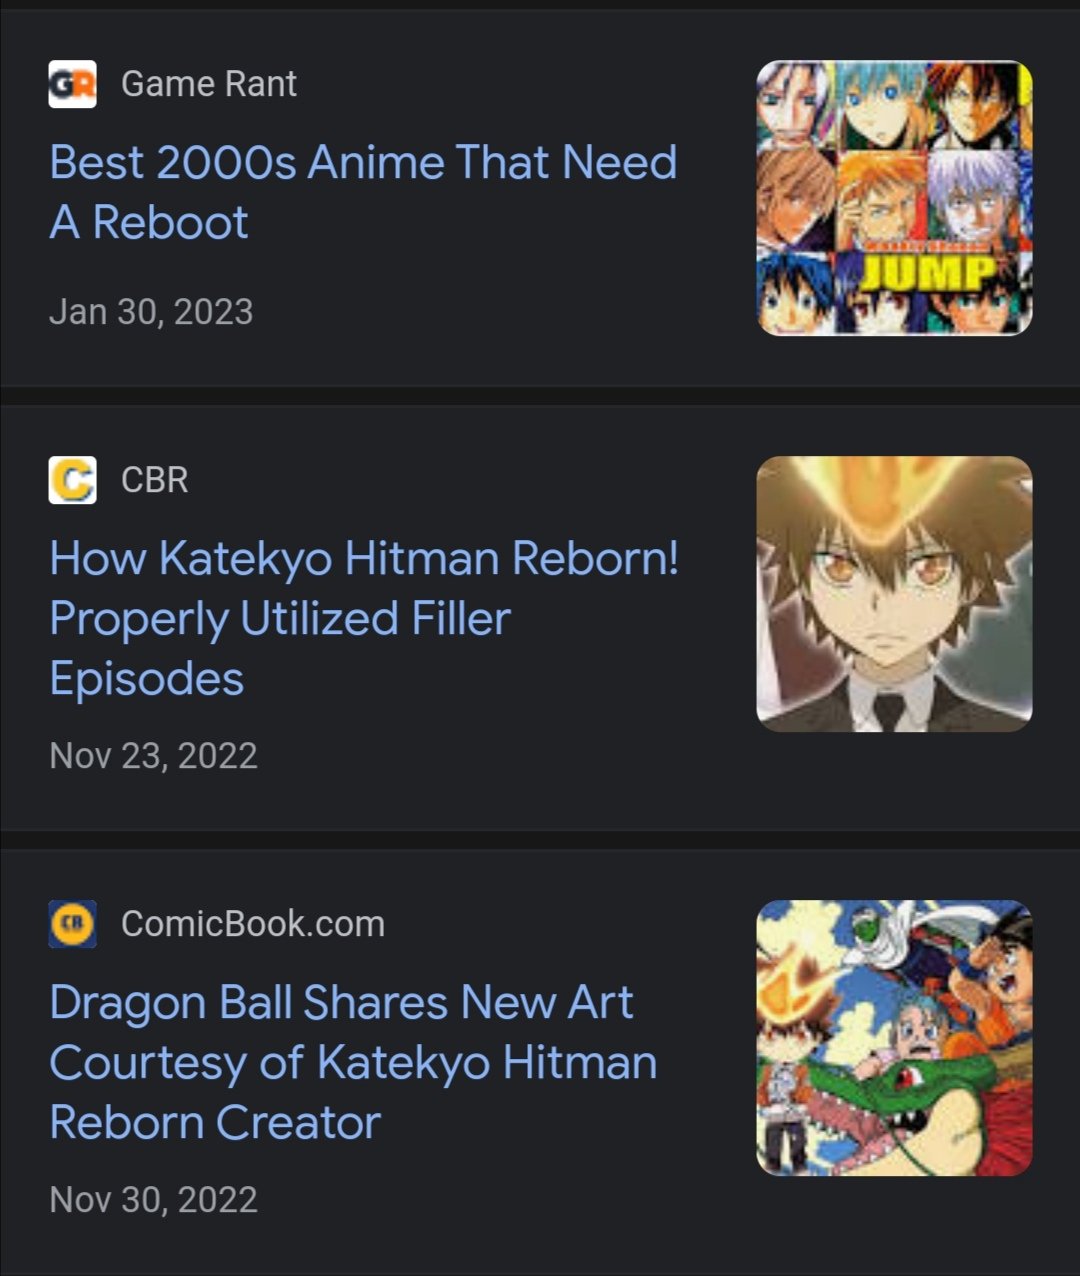 How Katekyo Hitman Reborn! Properly Utilized Filler Episodes